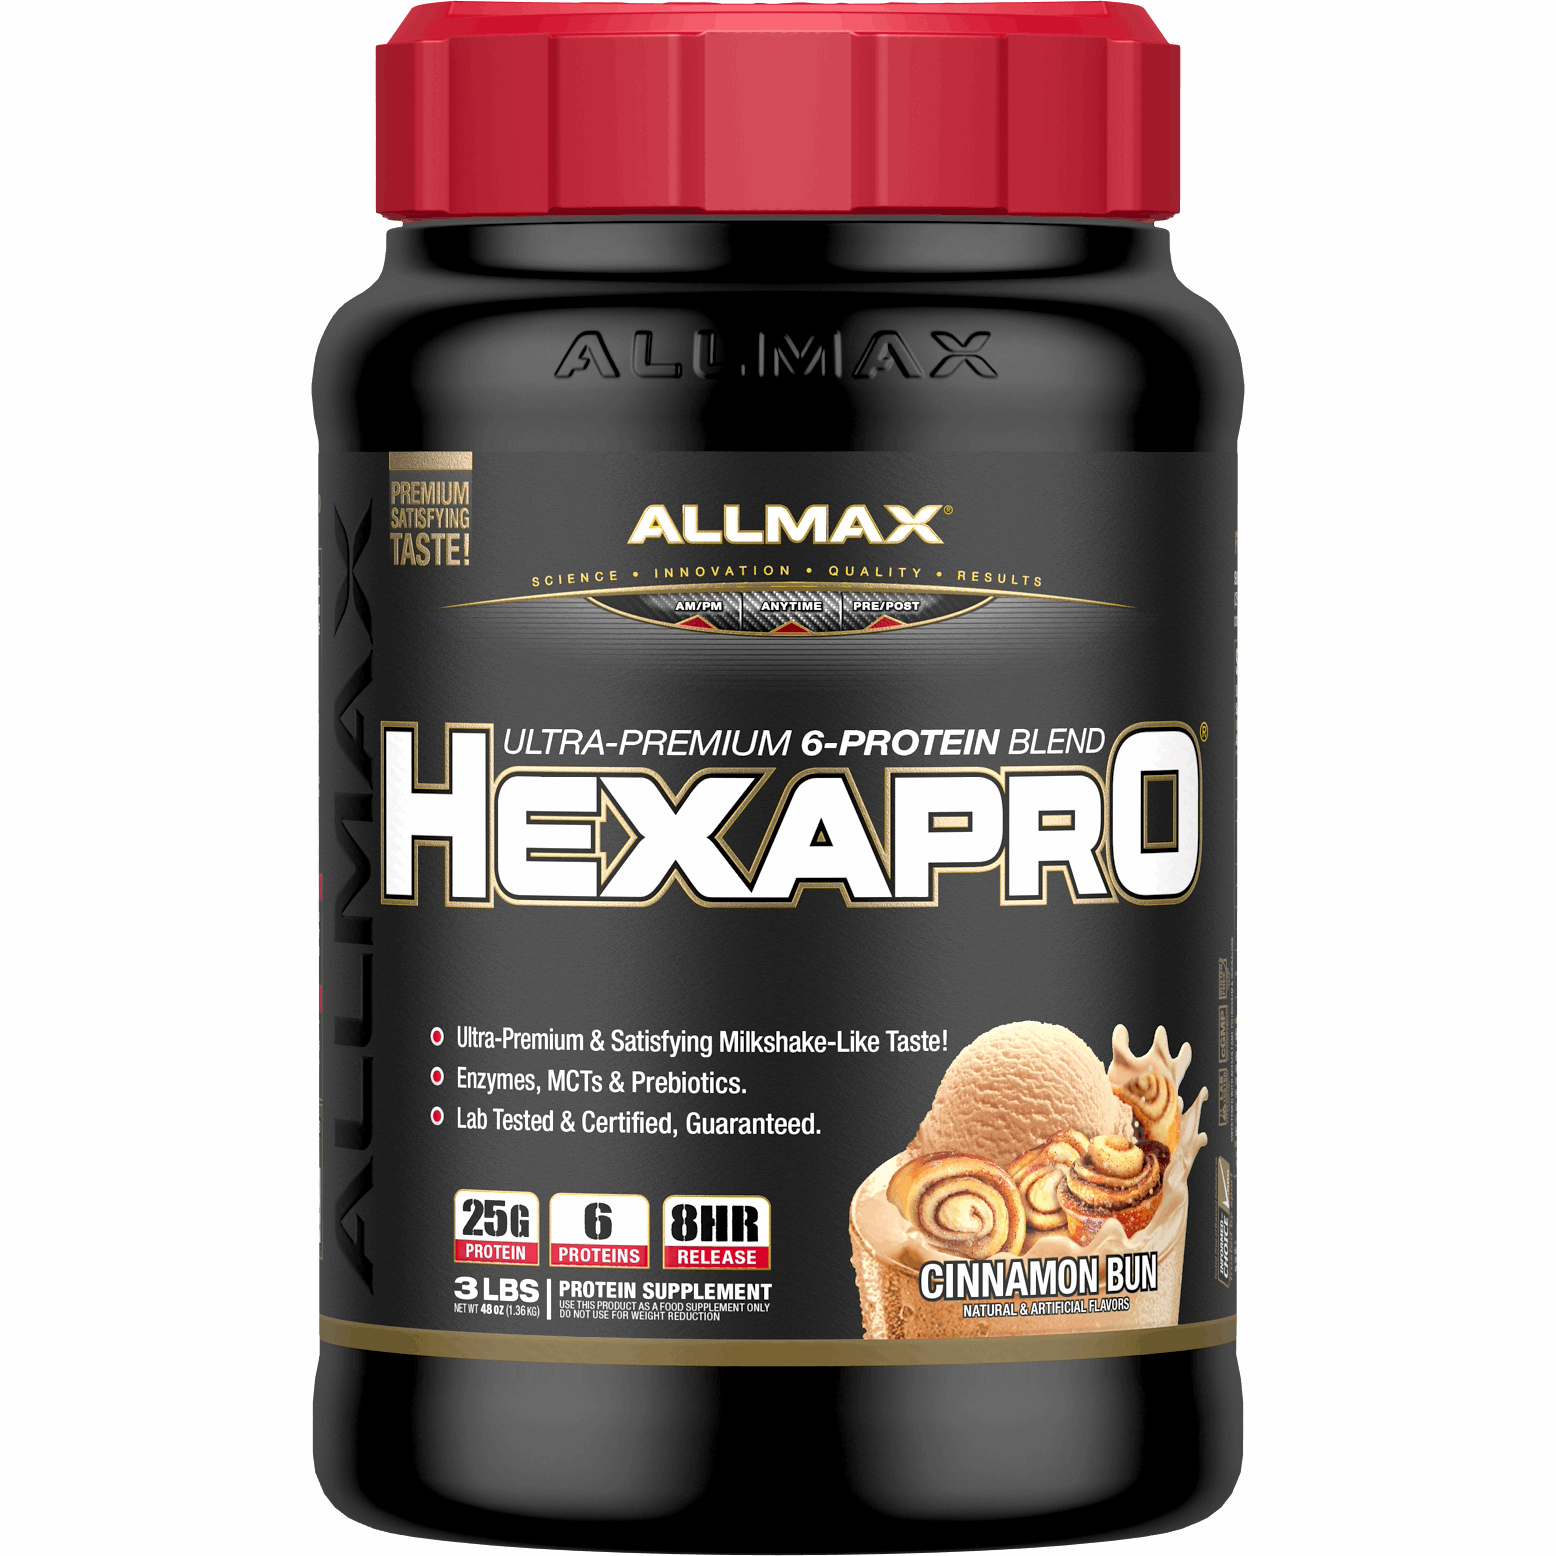 ALLMAX Hexapro 2lbs Allmax Nutrition Top Nutrition Canada